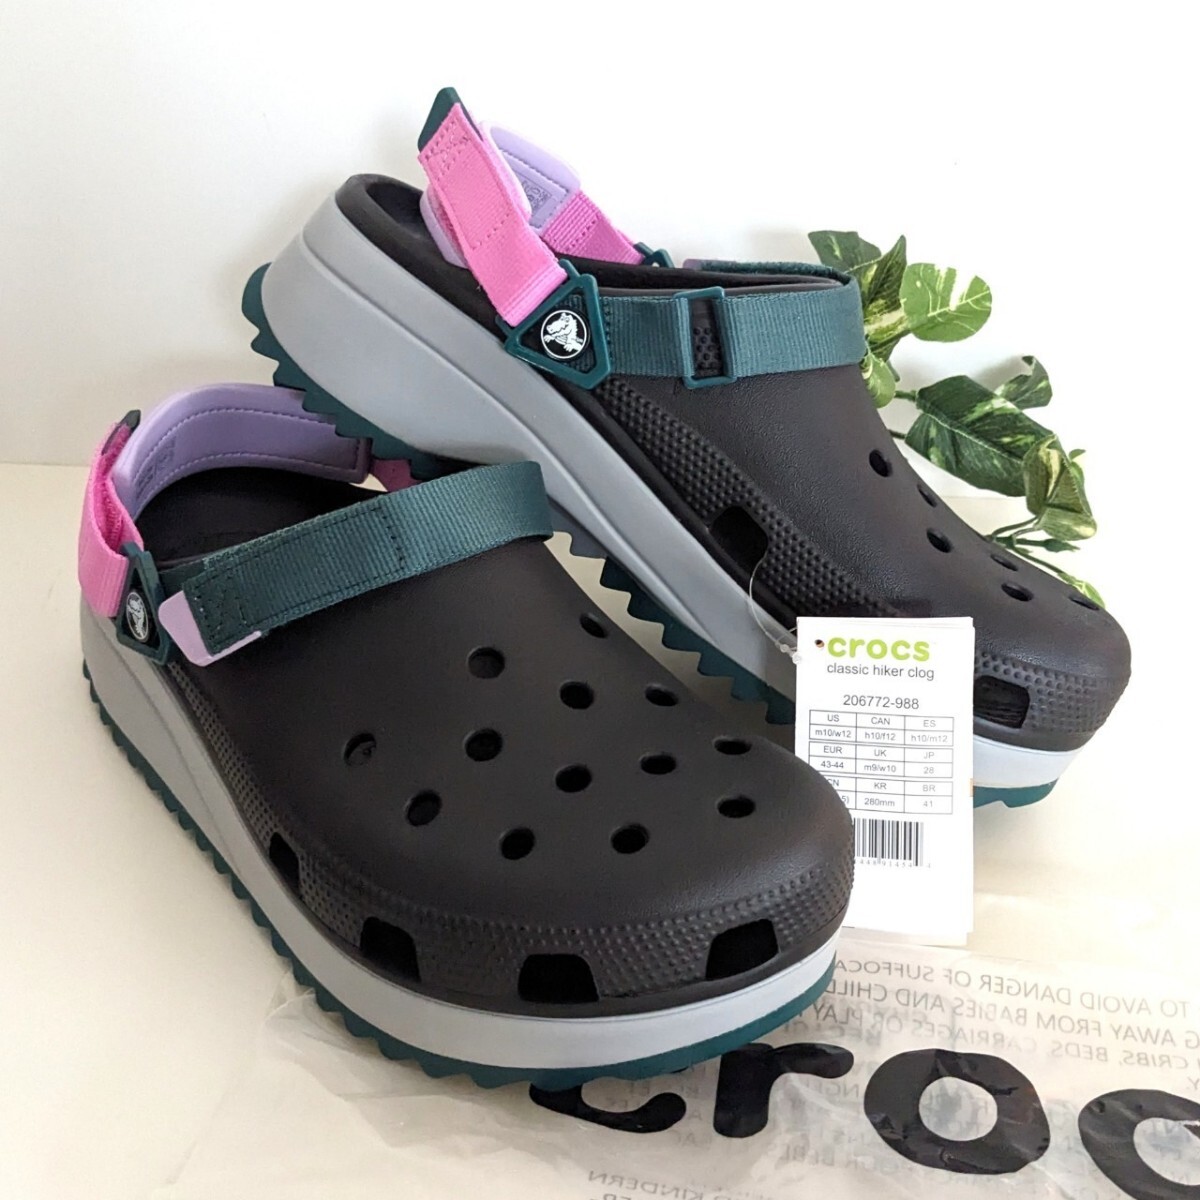  new goods * Crocs Classic Hiker Clog Classic high car clog thickness bottom sandals shoes outdoor camp black green pink black 28.